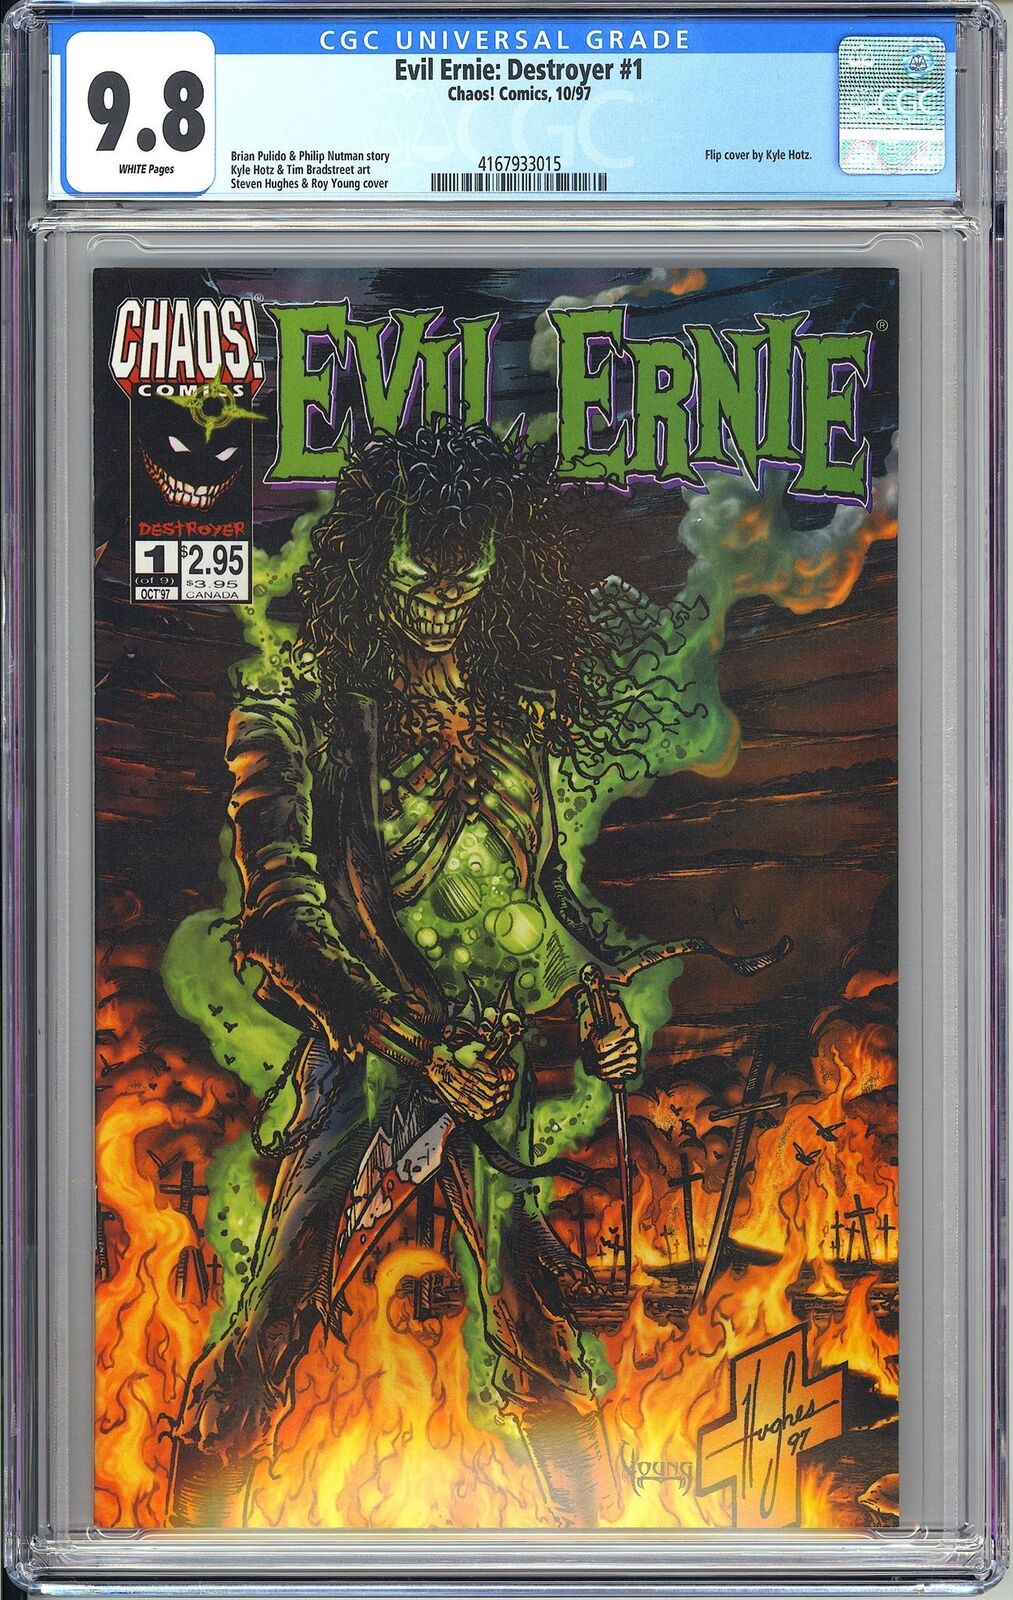 Evil Ernie: Destroyer 1 CGC 9.8 1997 4167933015 Flip Cover by Kyle Hotz Chaos